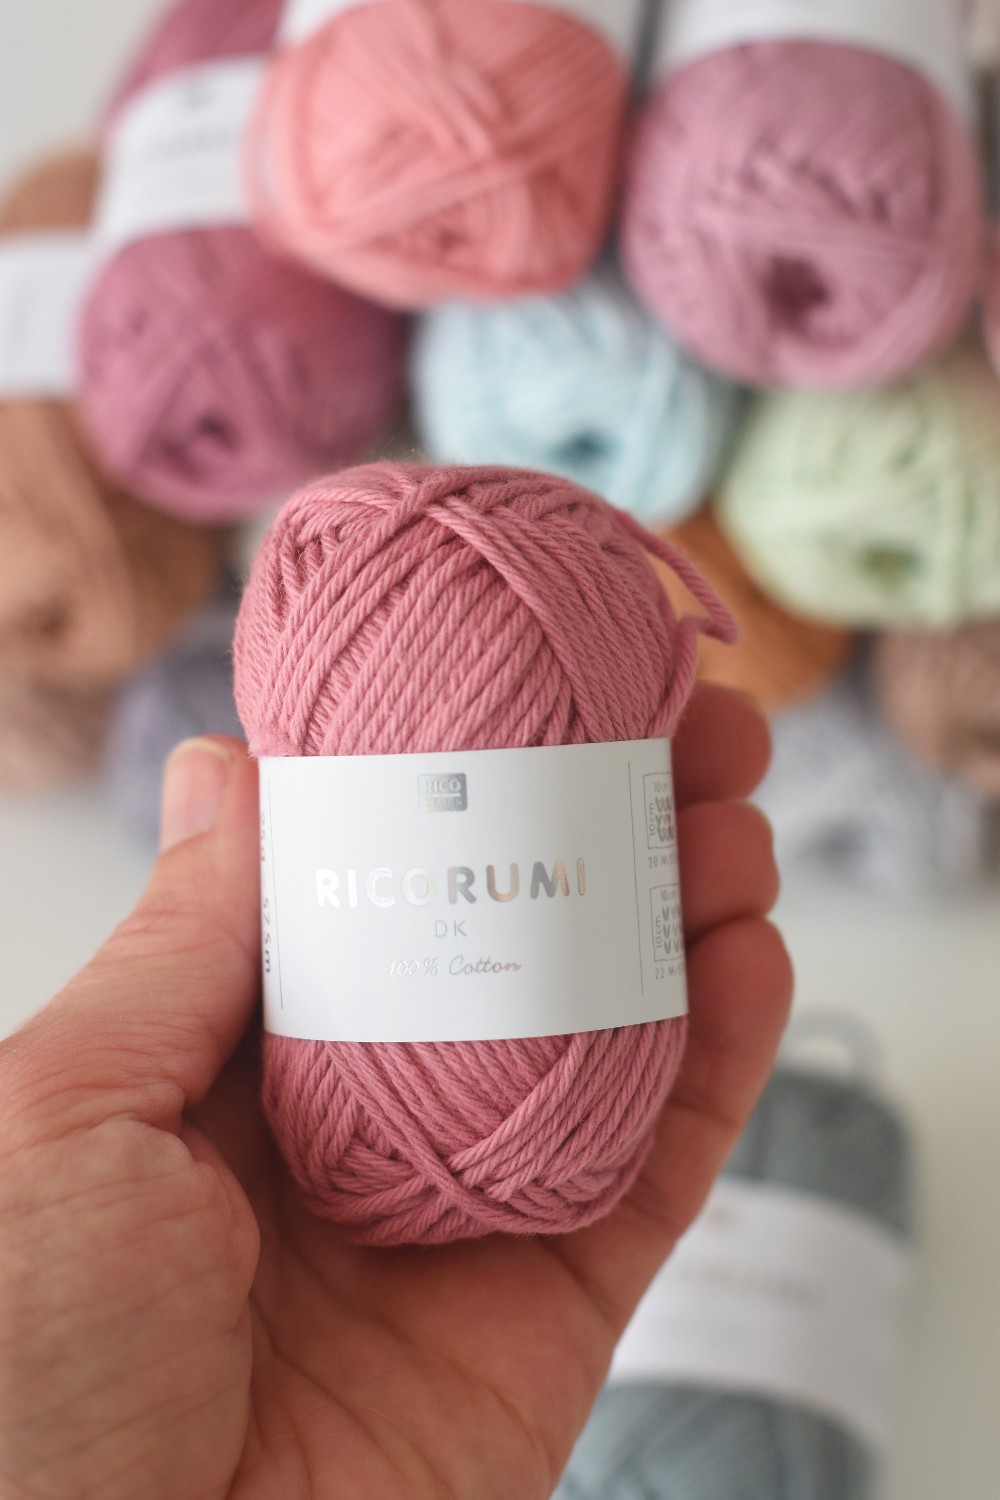 Rico RICORUMI DK 100% Cotton Amigurumi Crochet Yarn Cute Little 25g Balls!